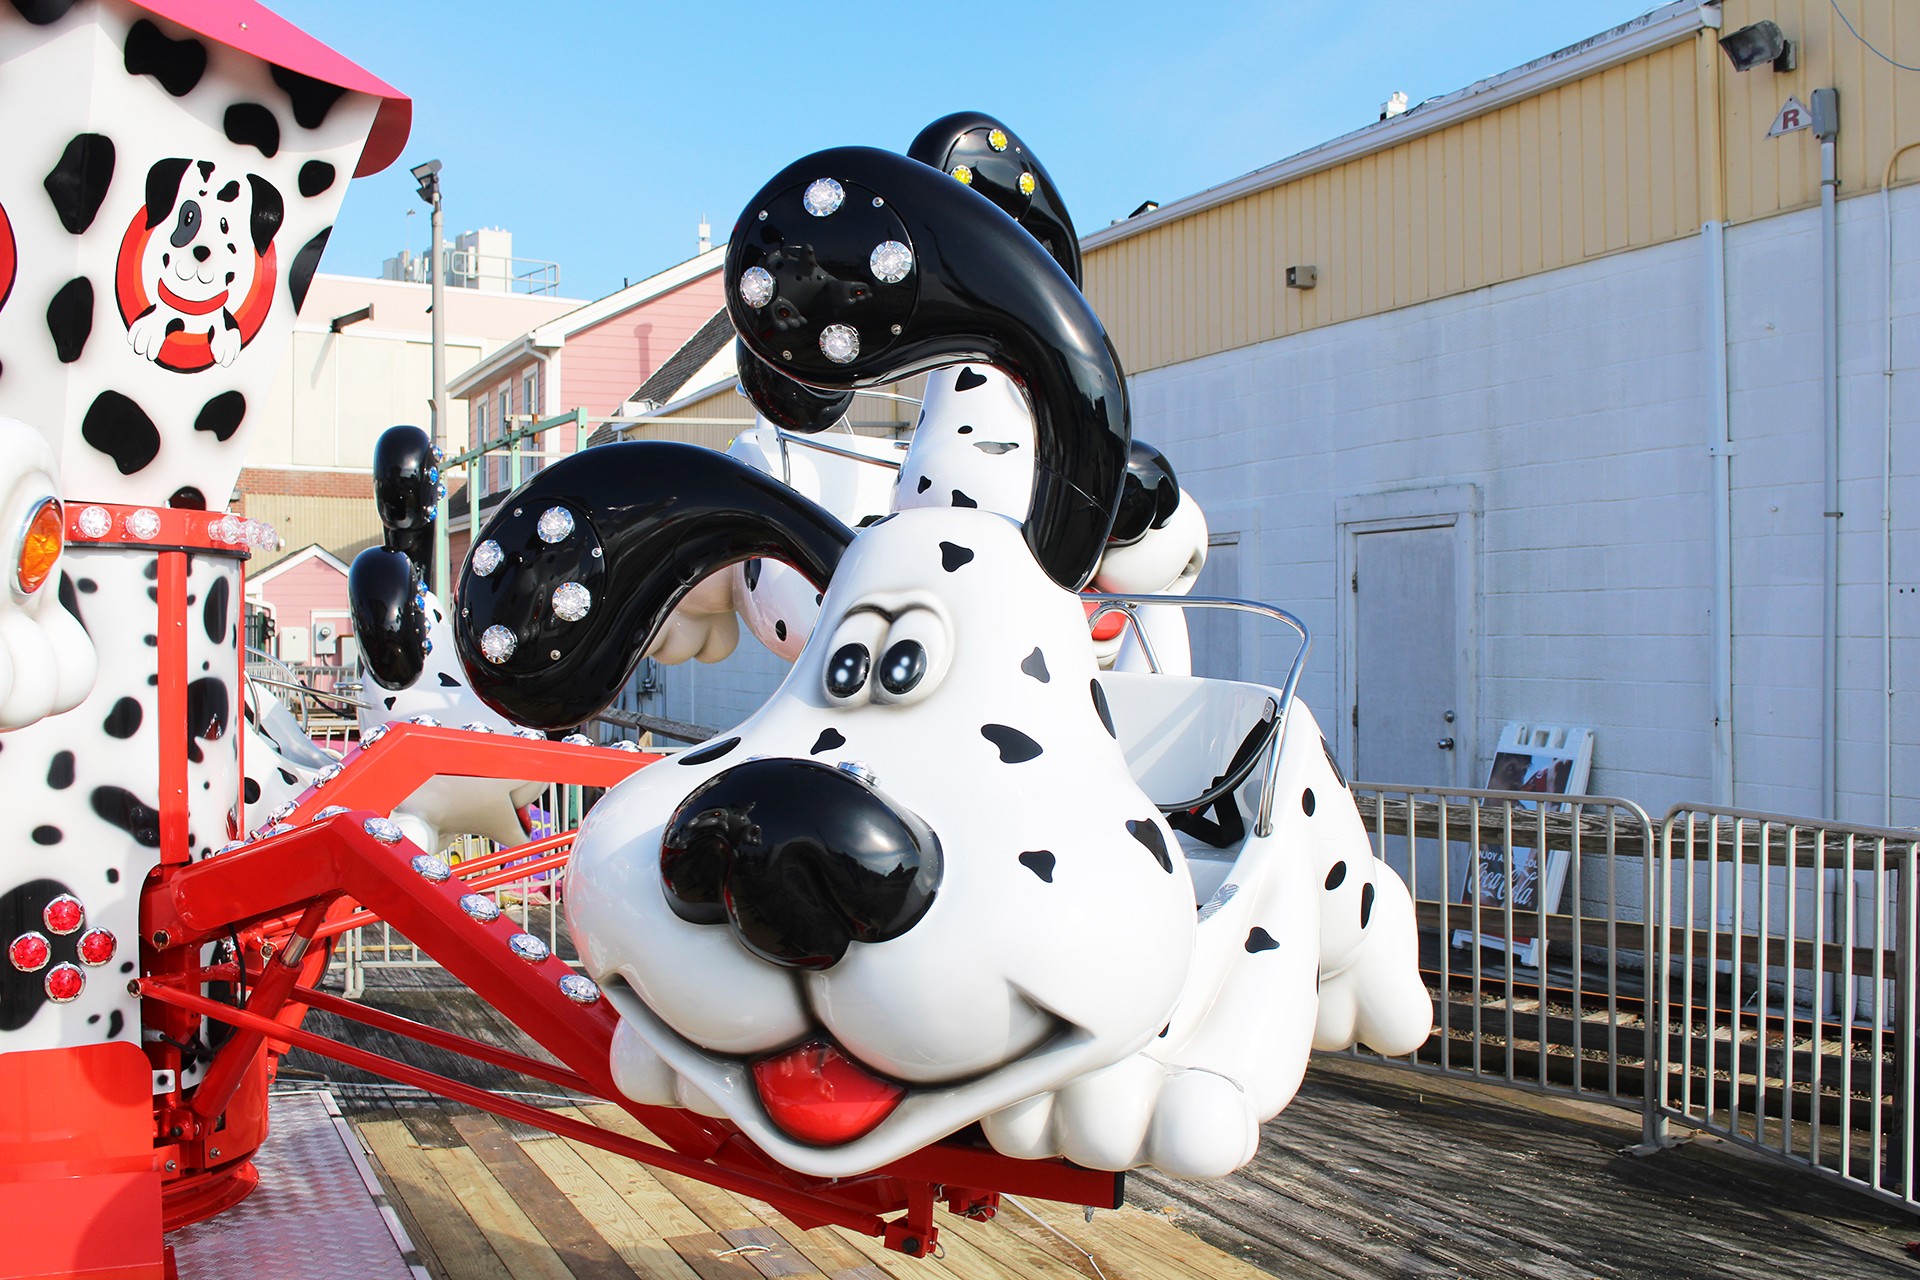 Doggie Dash ride at Jenkinson's Boardwalk